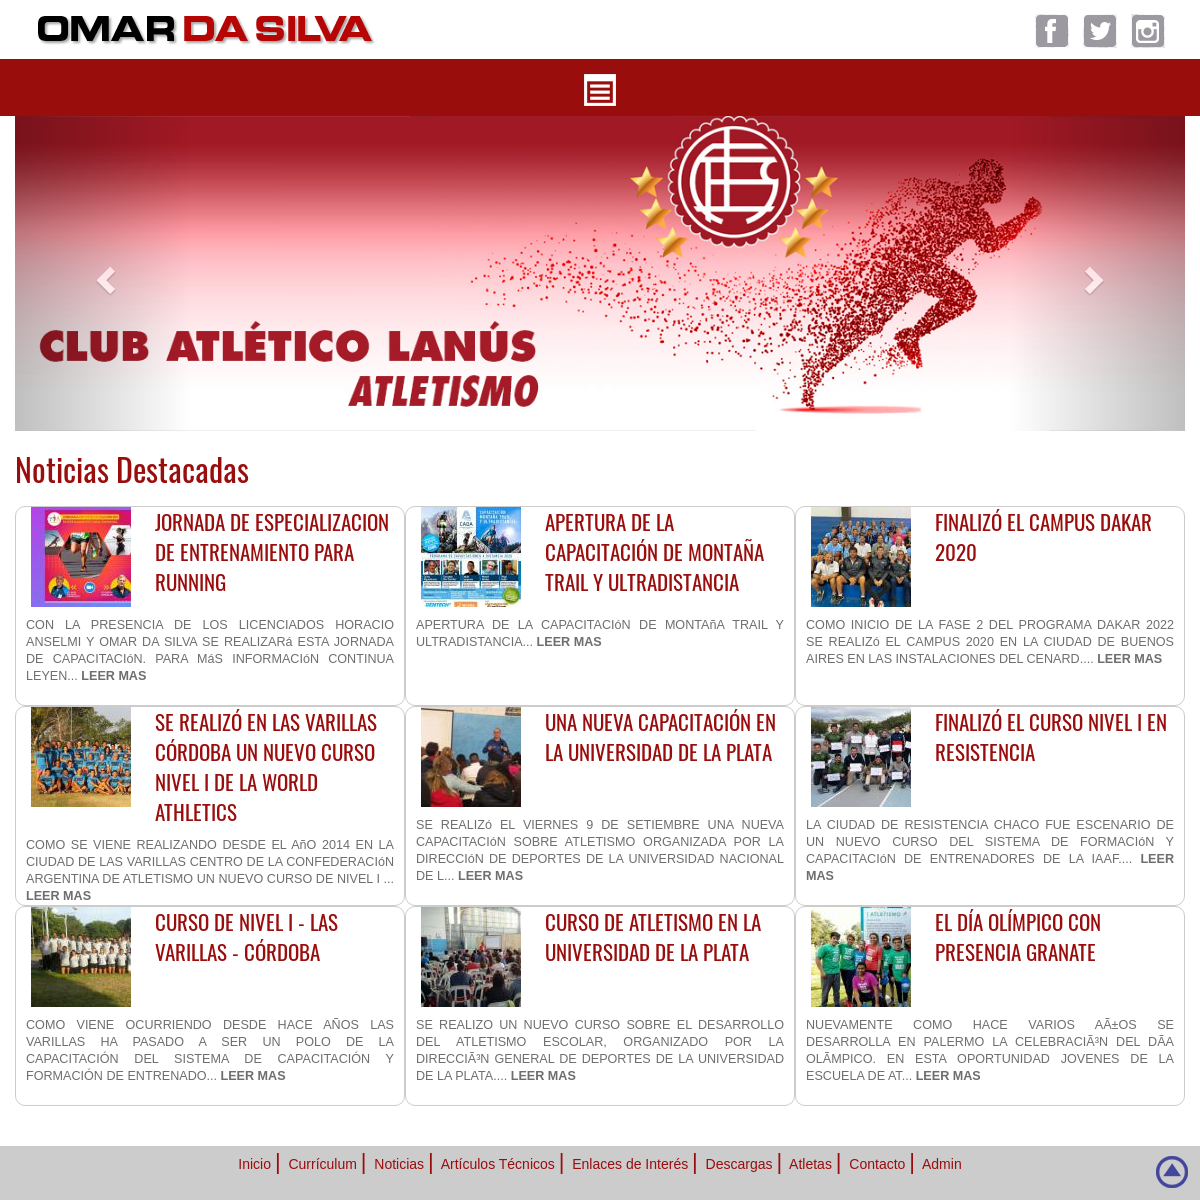 A complete backup of omardasilva.com.ar